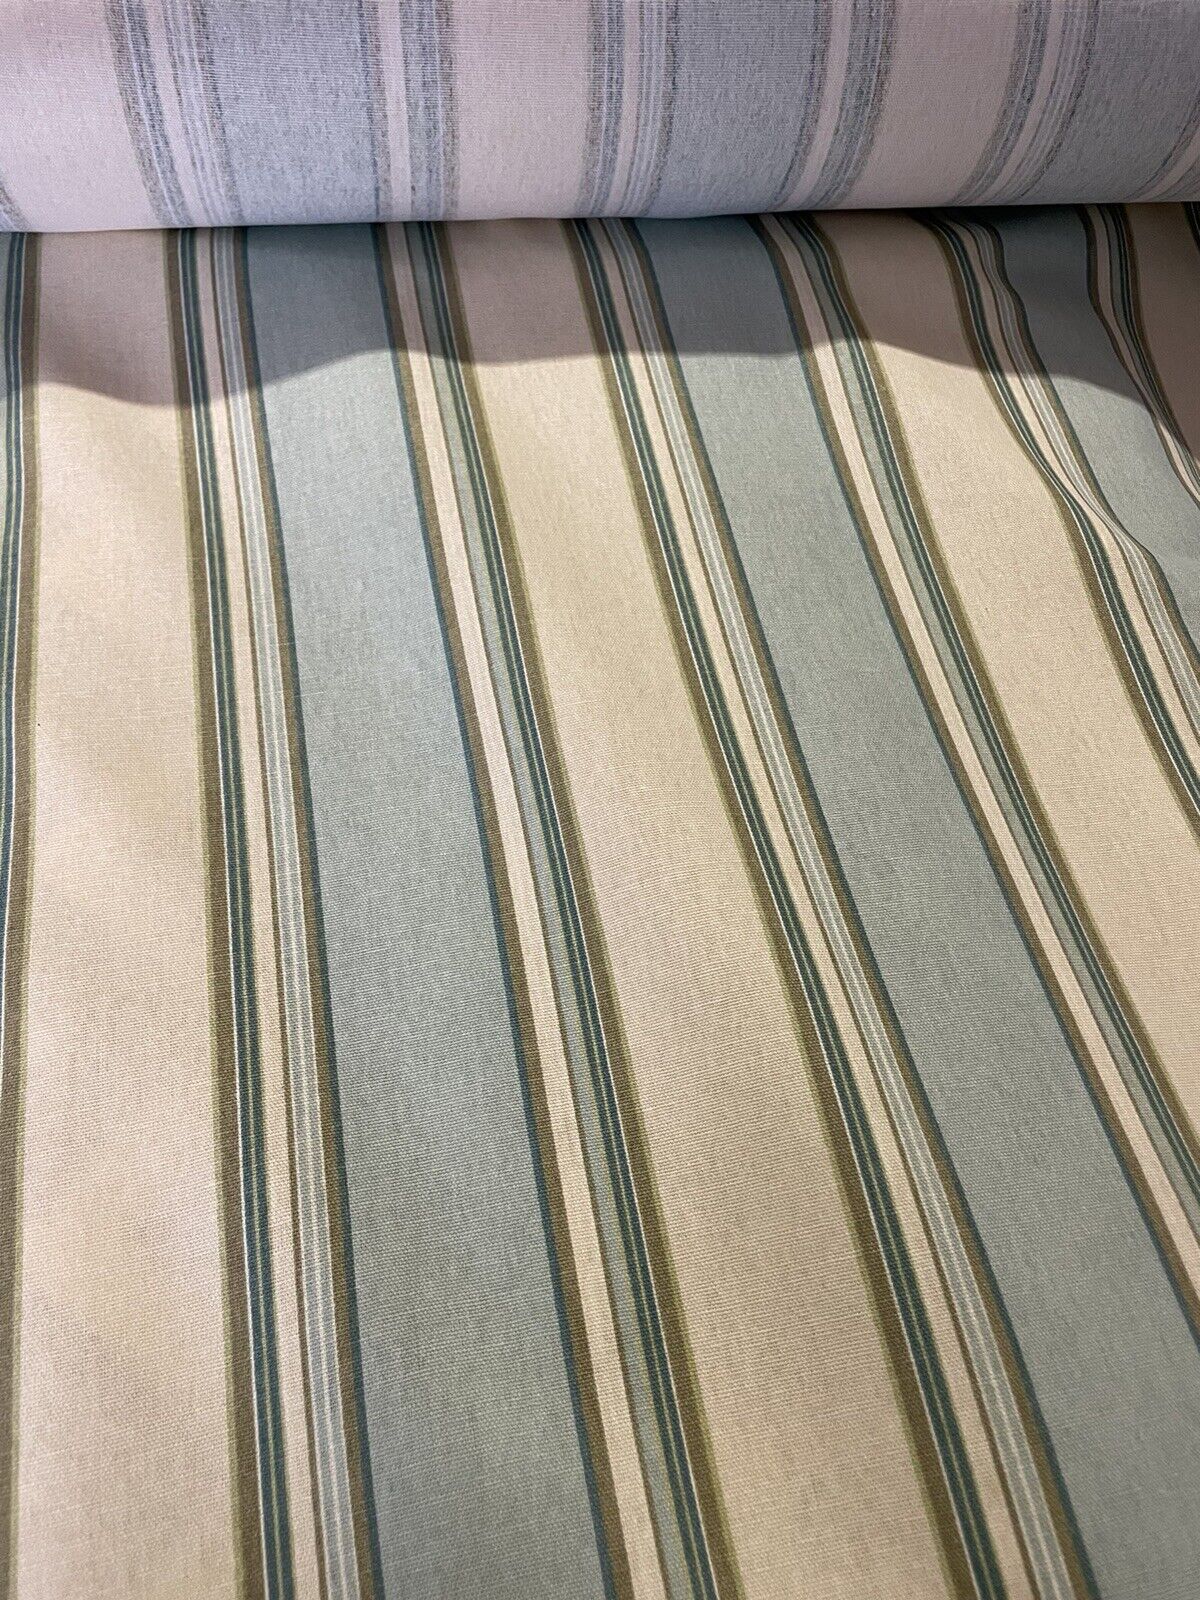 Hampton Bay Stripe Design - Cotton Duck - Fabric By The Yard